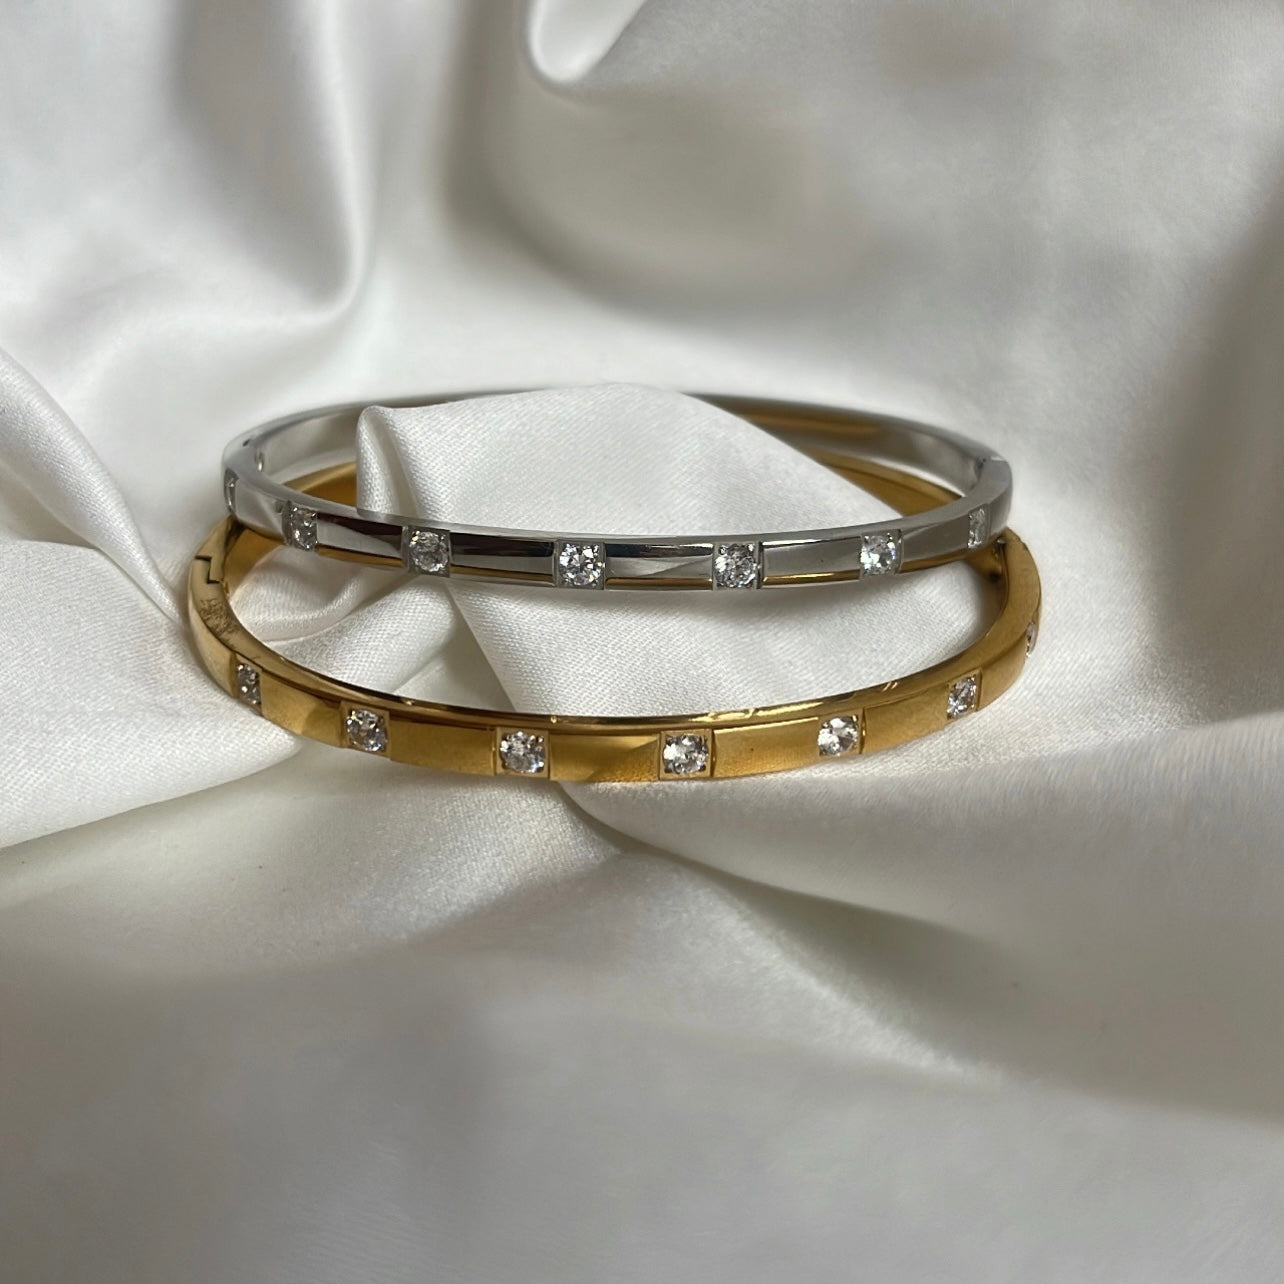 Liam | 18k gold plated bracelet - Ladywithcraft